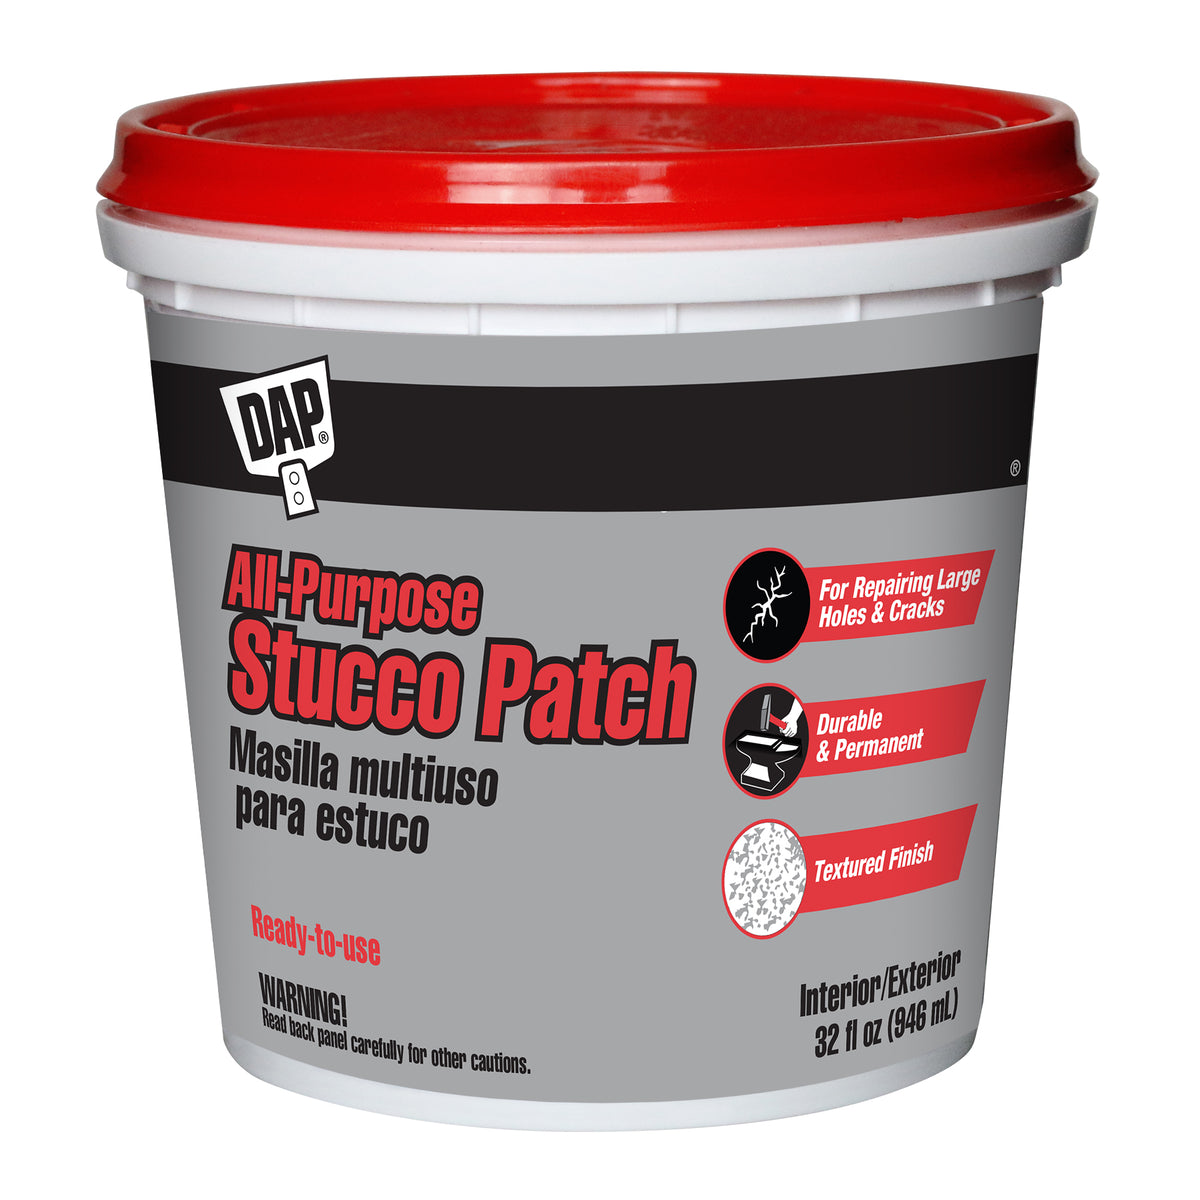 DAP All-Purpose Stucco Patch